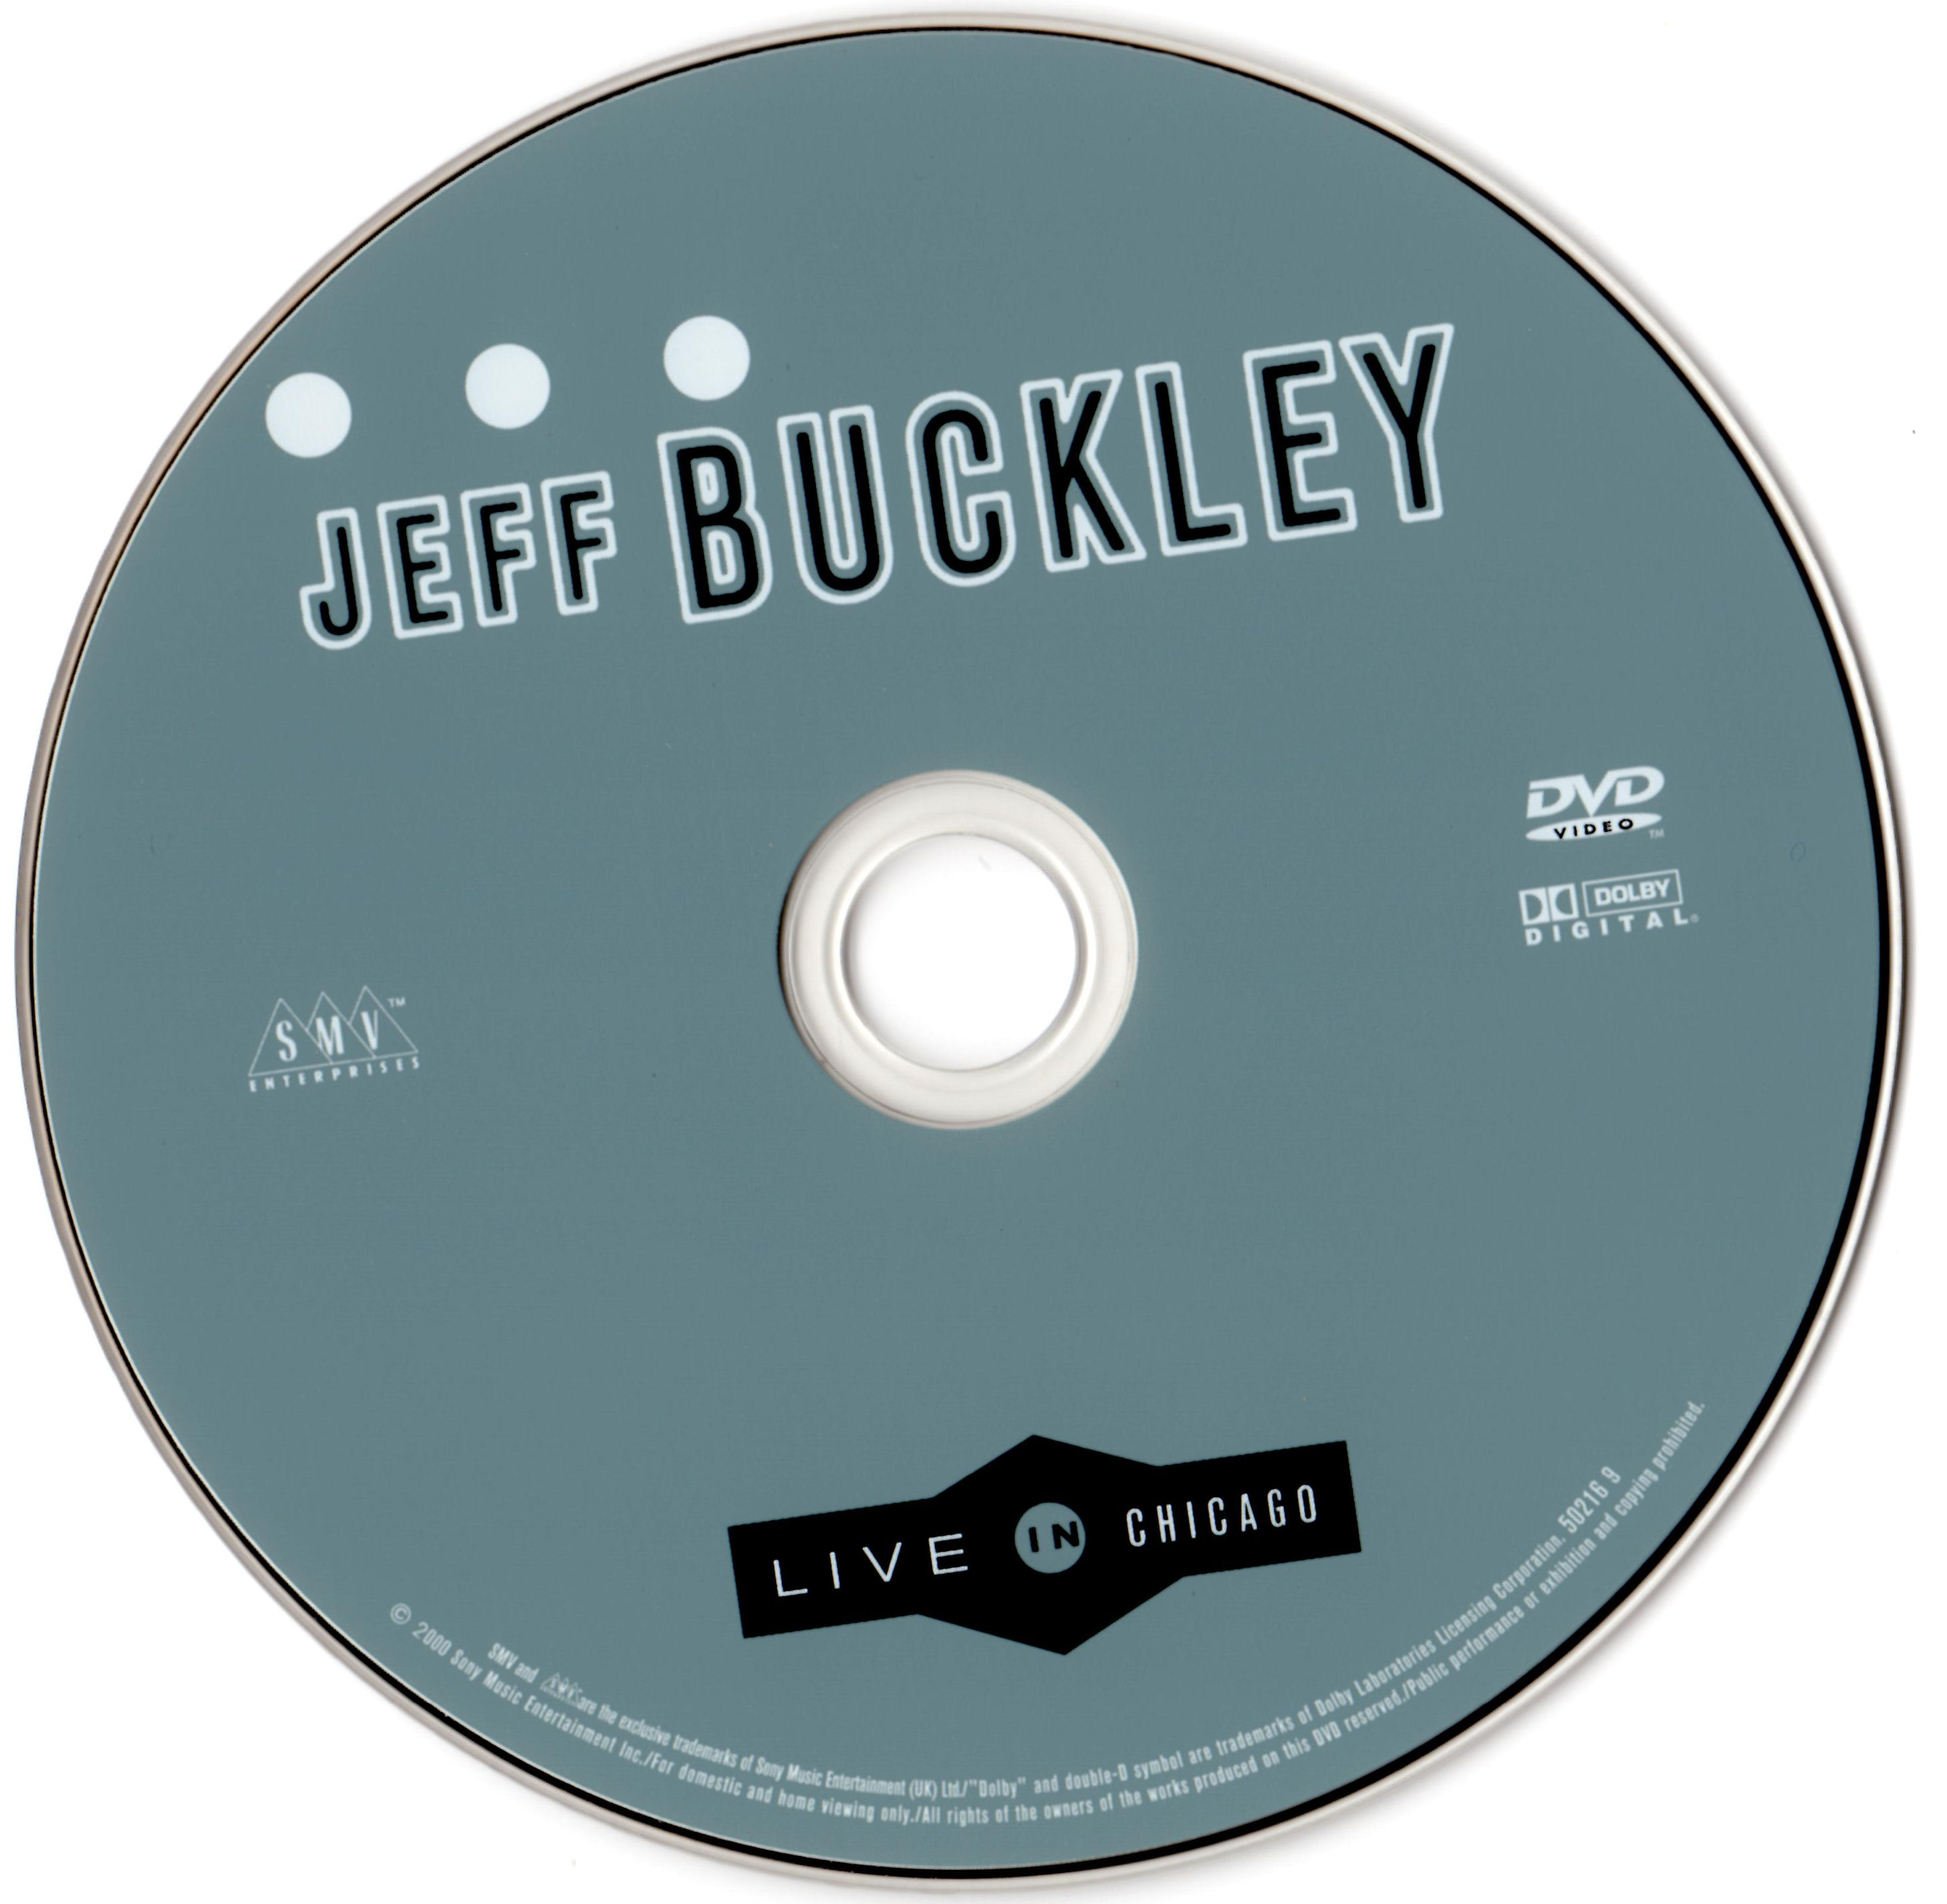 Jeff buckley live chicago